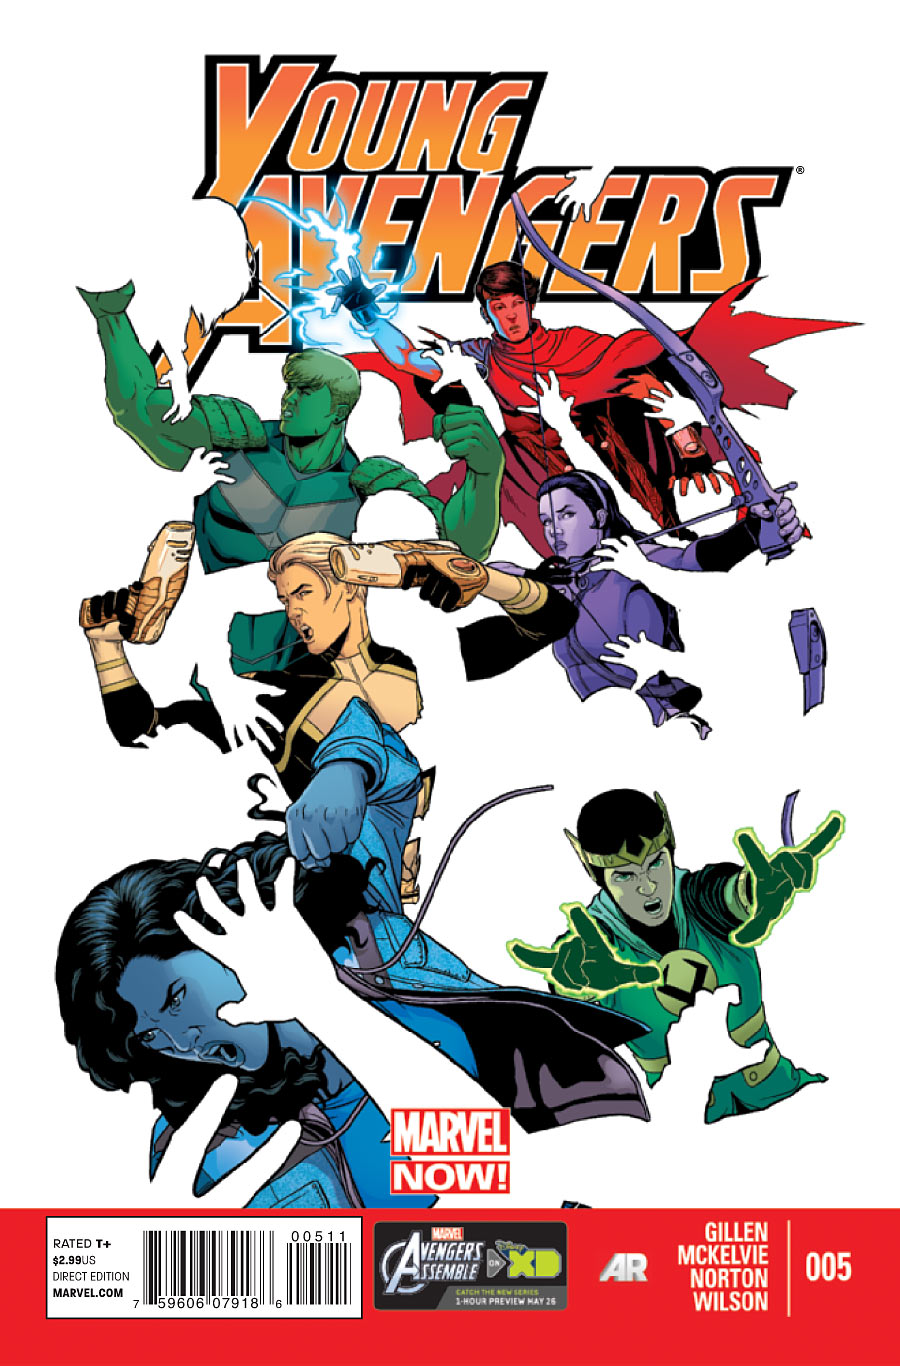 Young Avengers, Vol. 1 by Kieron Gillen